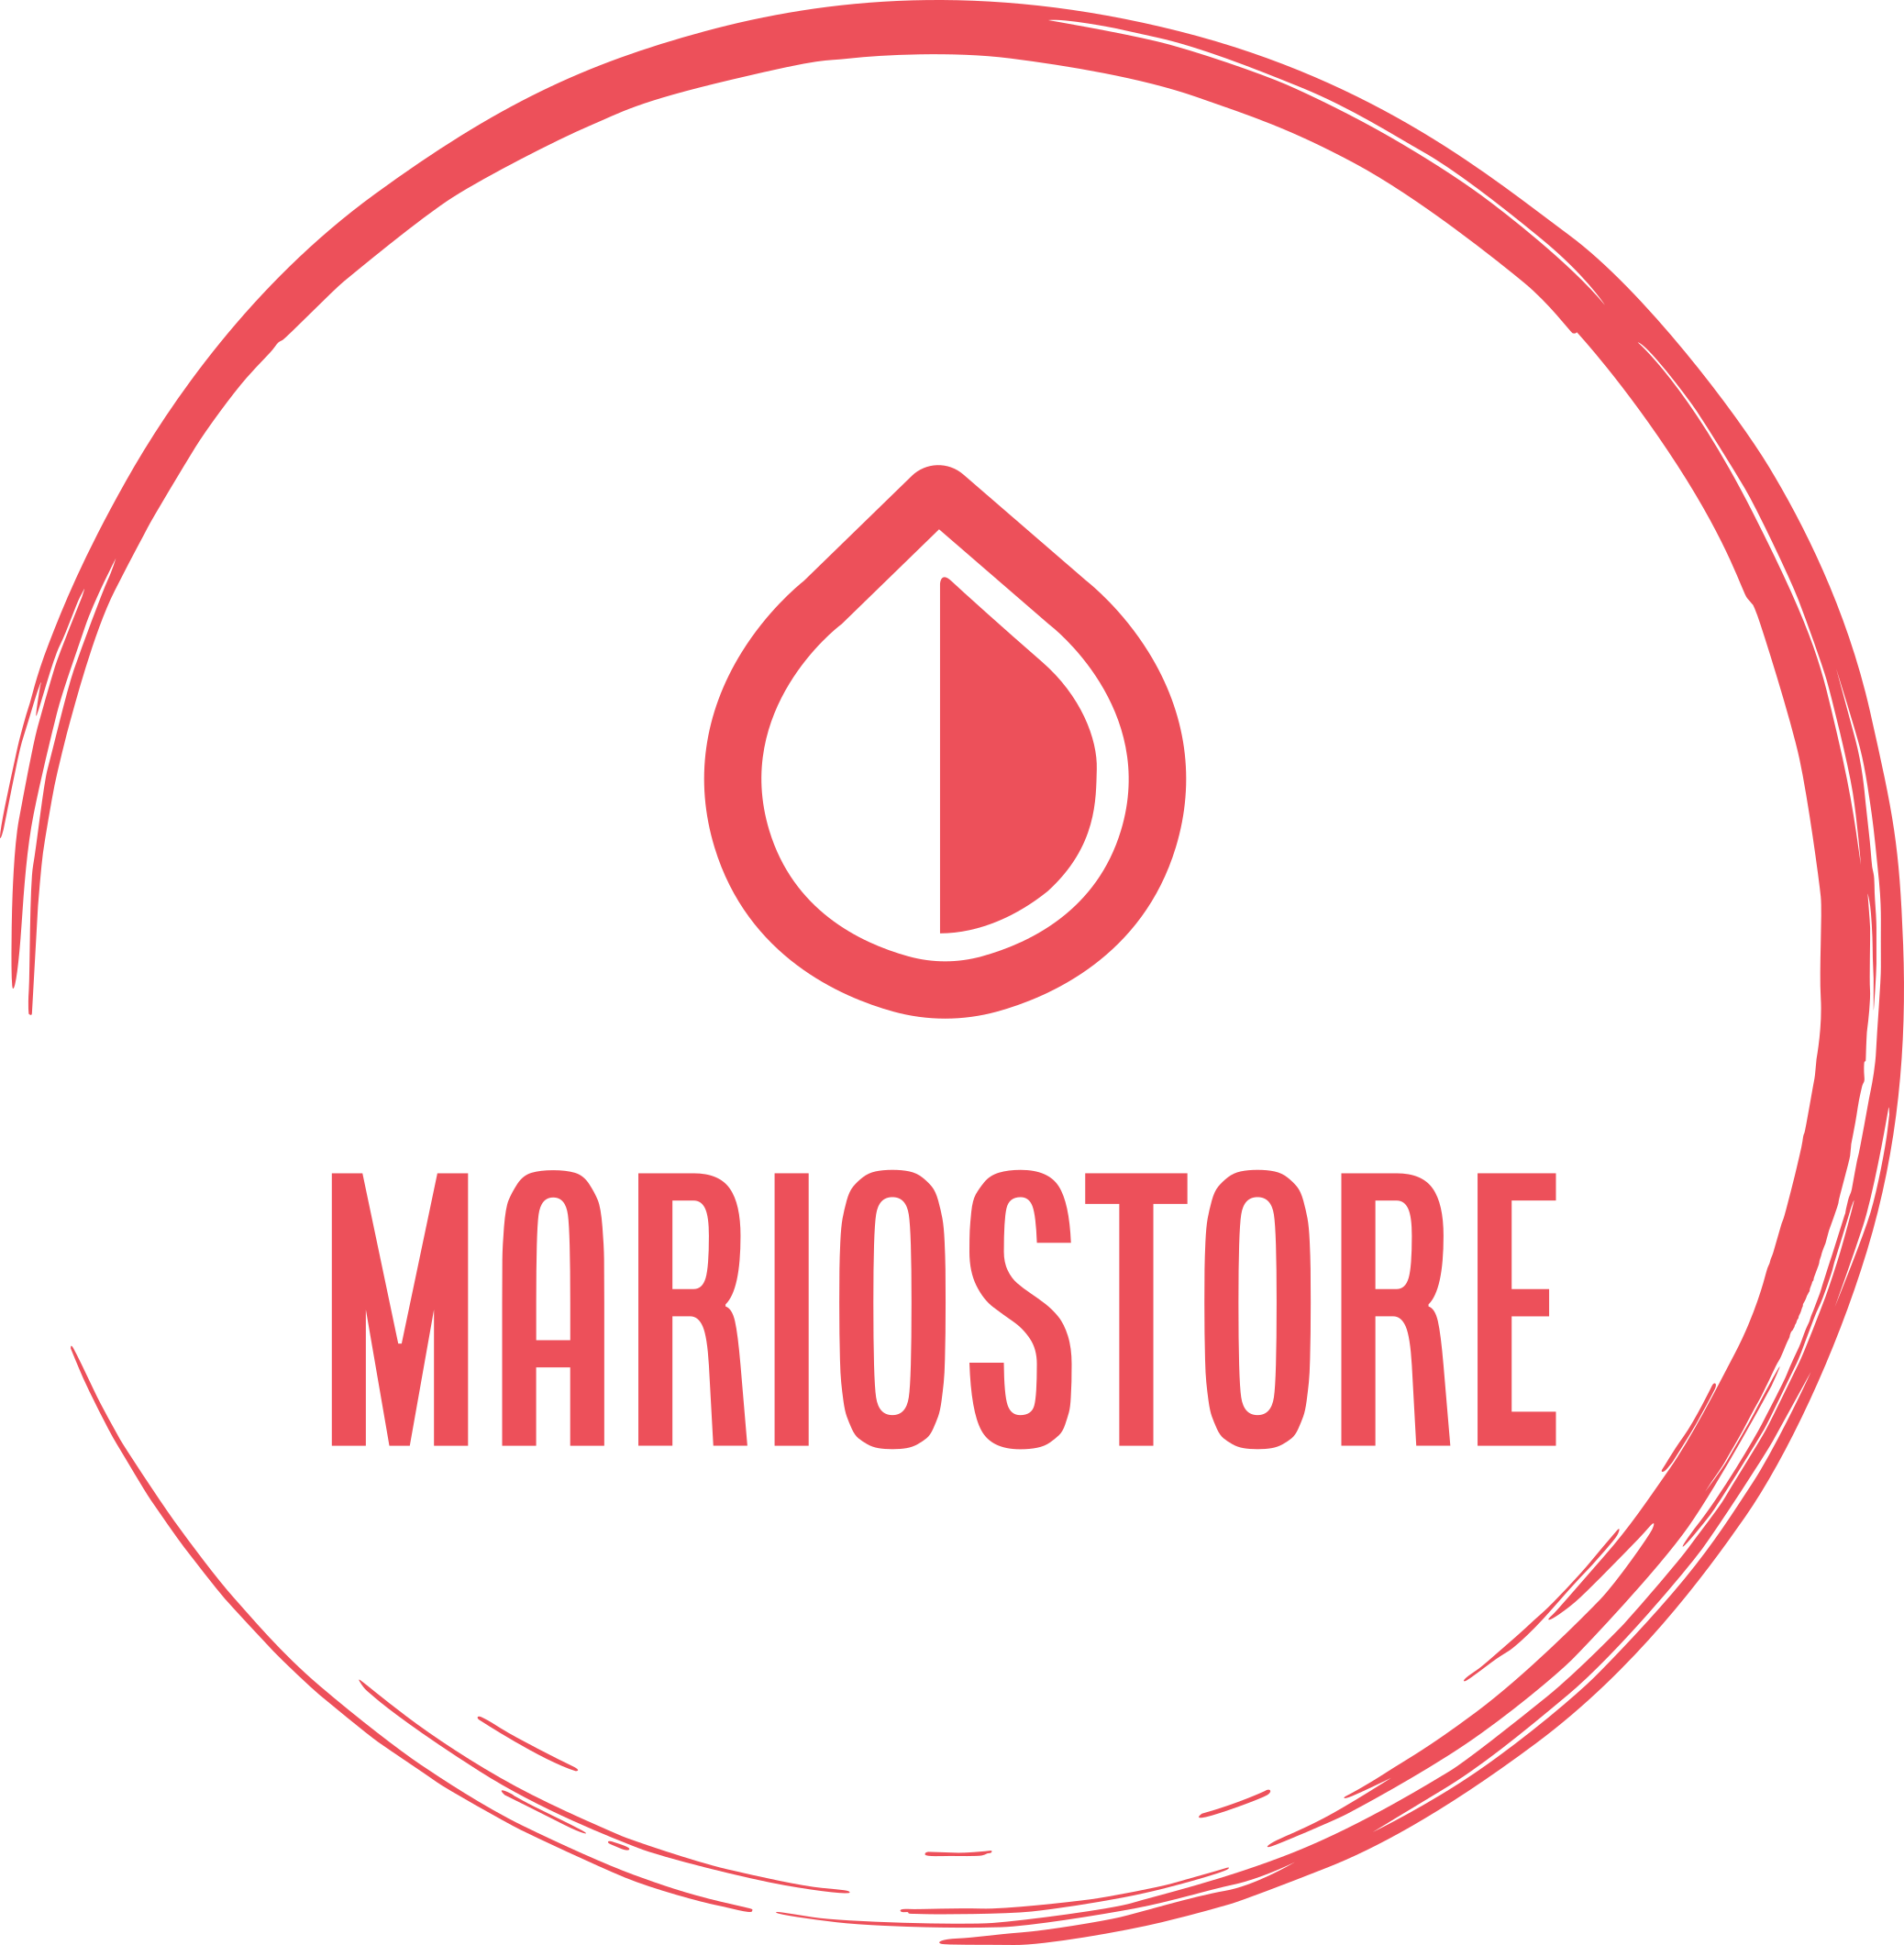 (c) Mariostoregb.co.uk